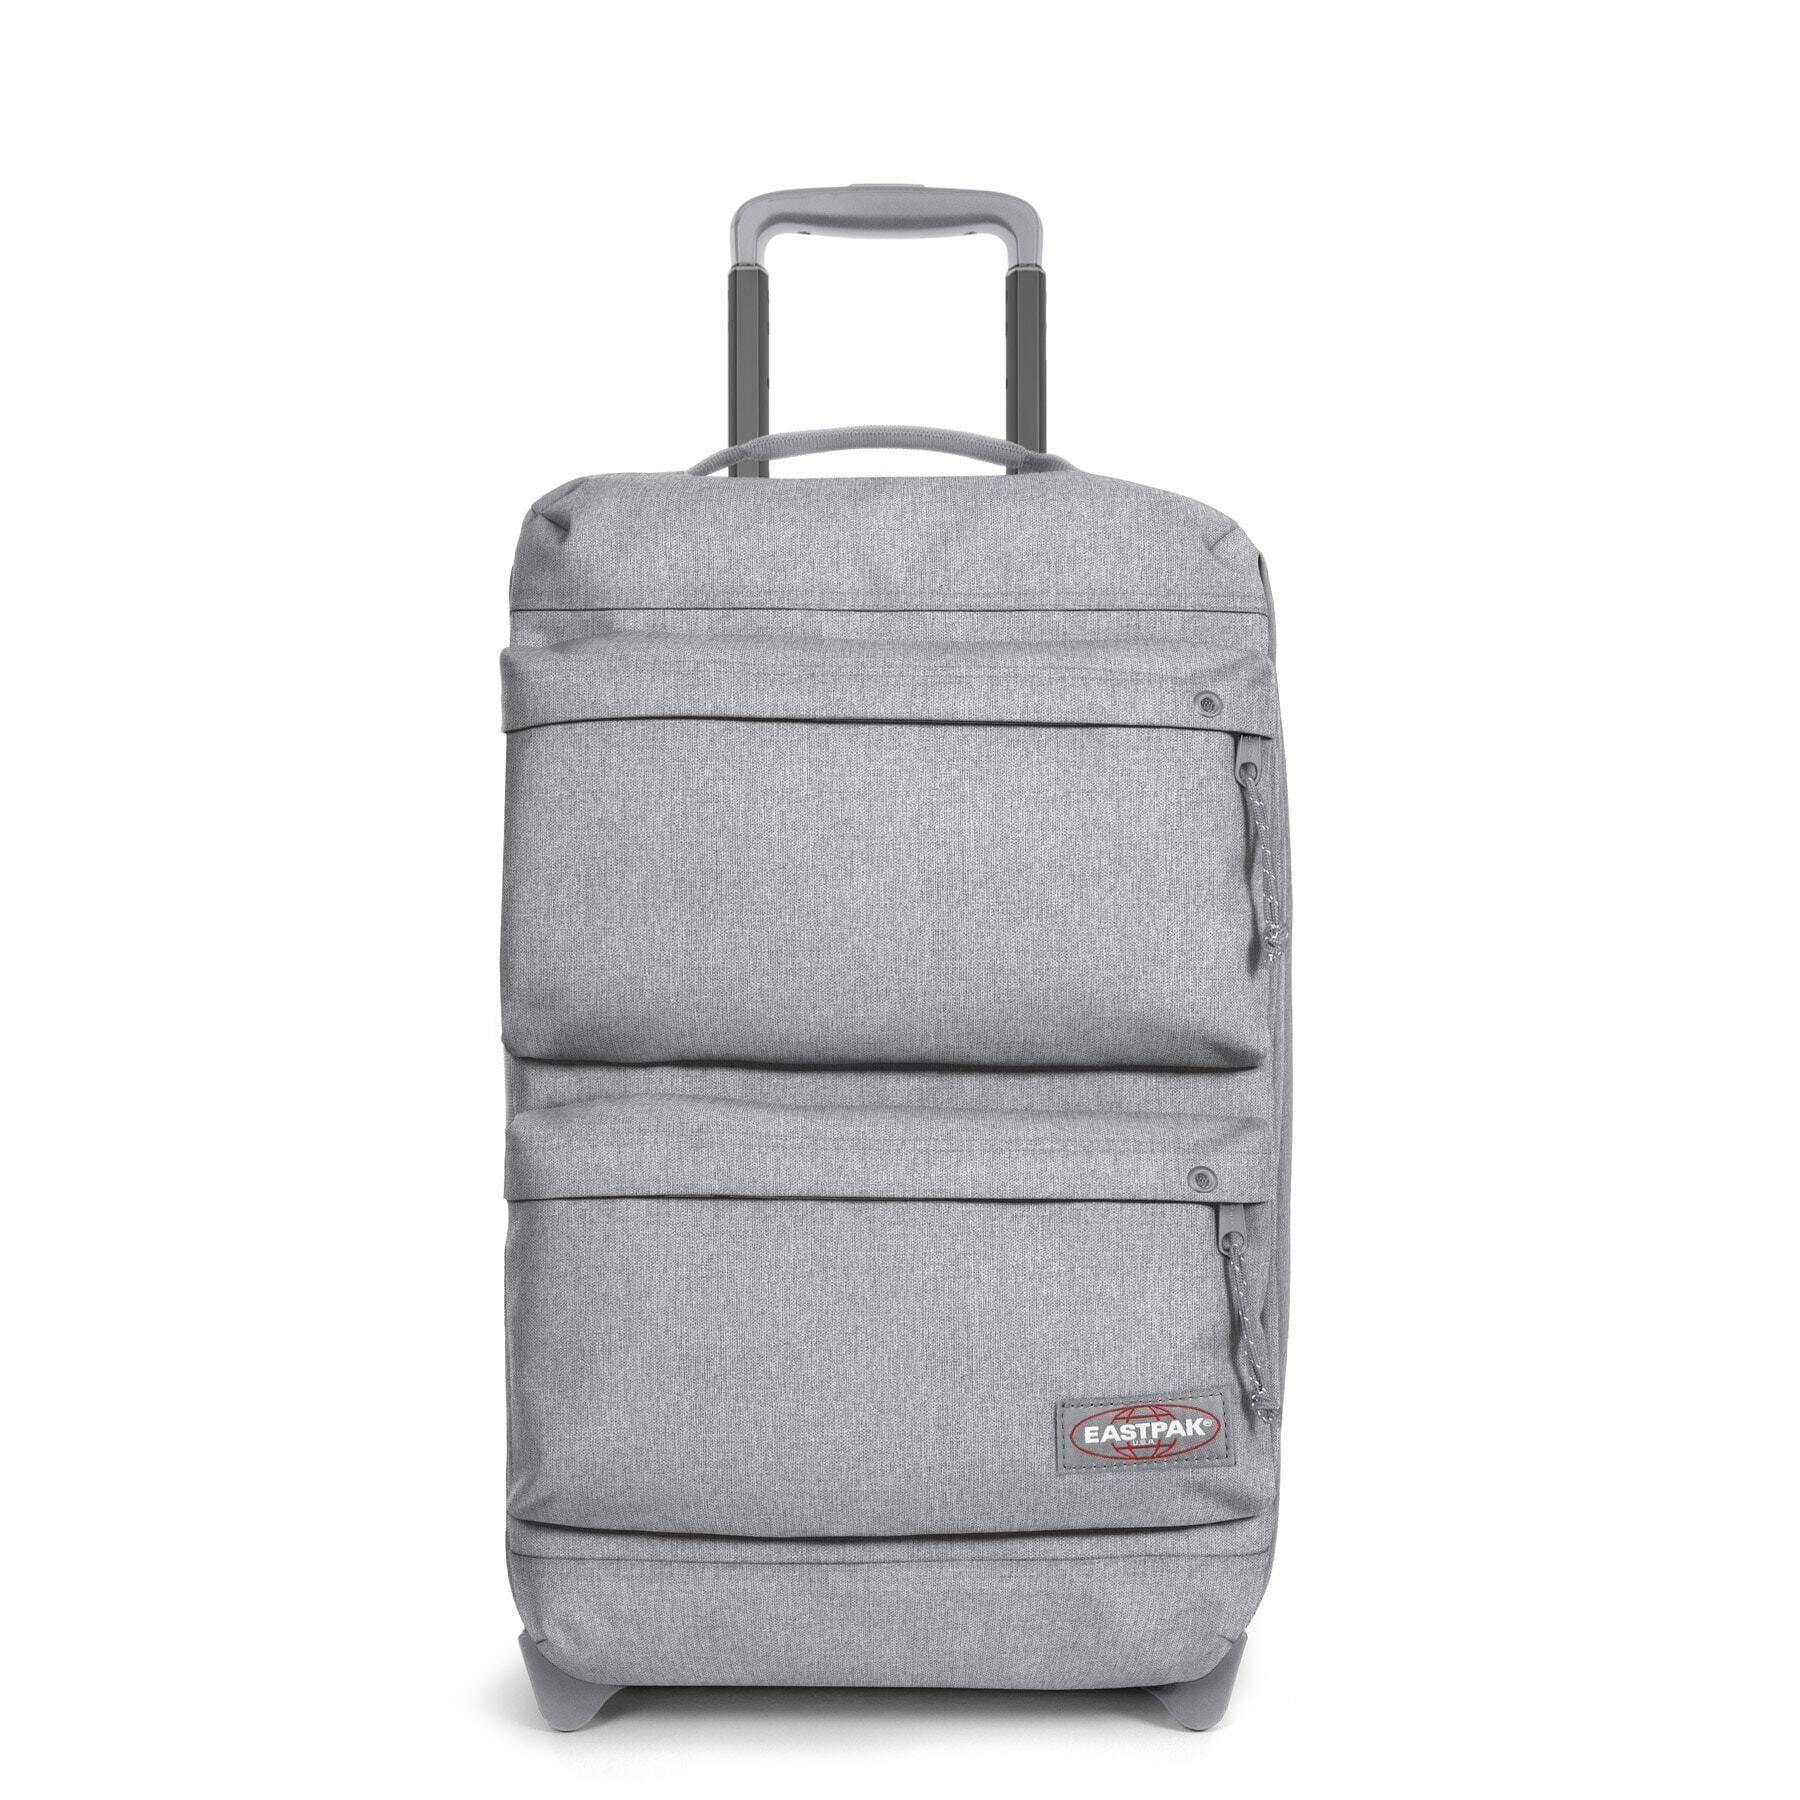 Travel bag Eastpak Double Tranverz S